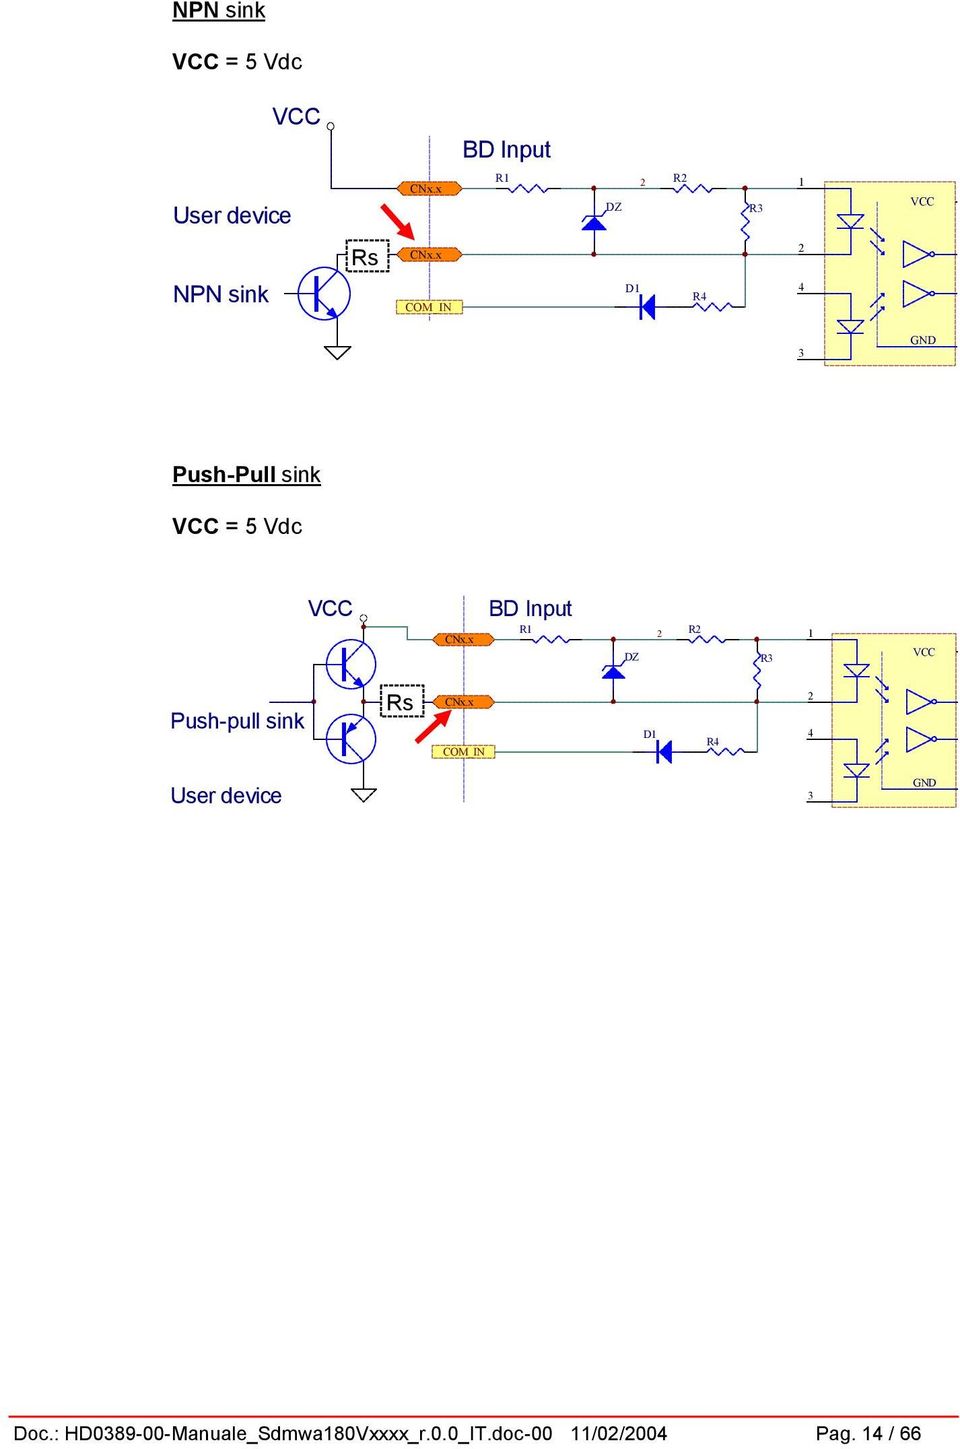 x BD Input R1 DZ R R3 1 VCC Push-pull snk Rs CNx.